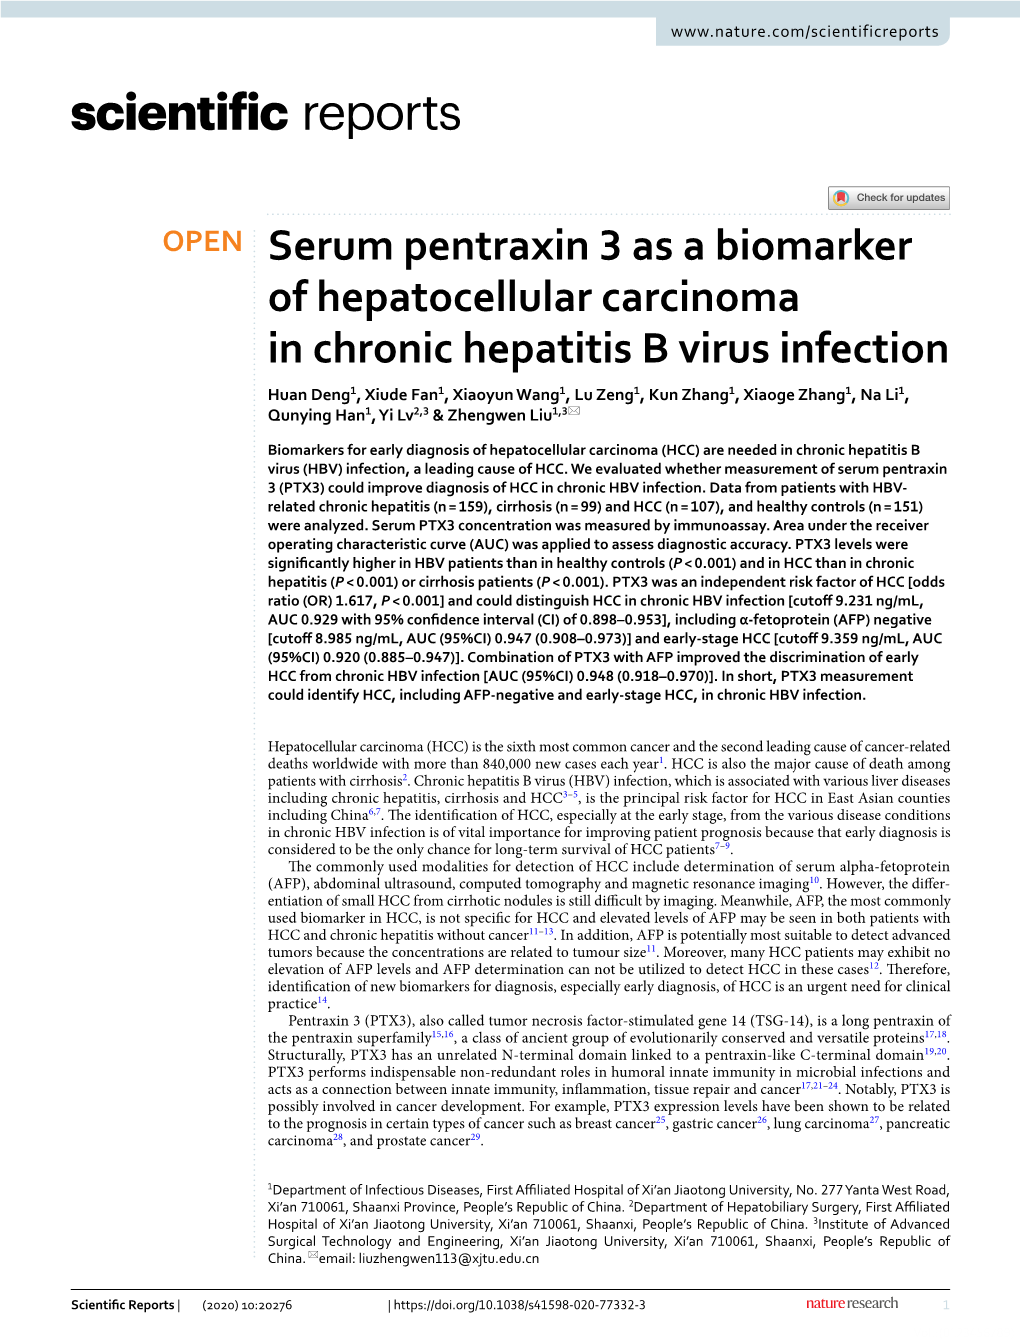 Serum Pentraxin 3 As a Biomarker of Hepatocellular Carcinoma in Chronic Hepatitis B Virus Infection